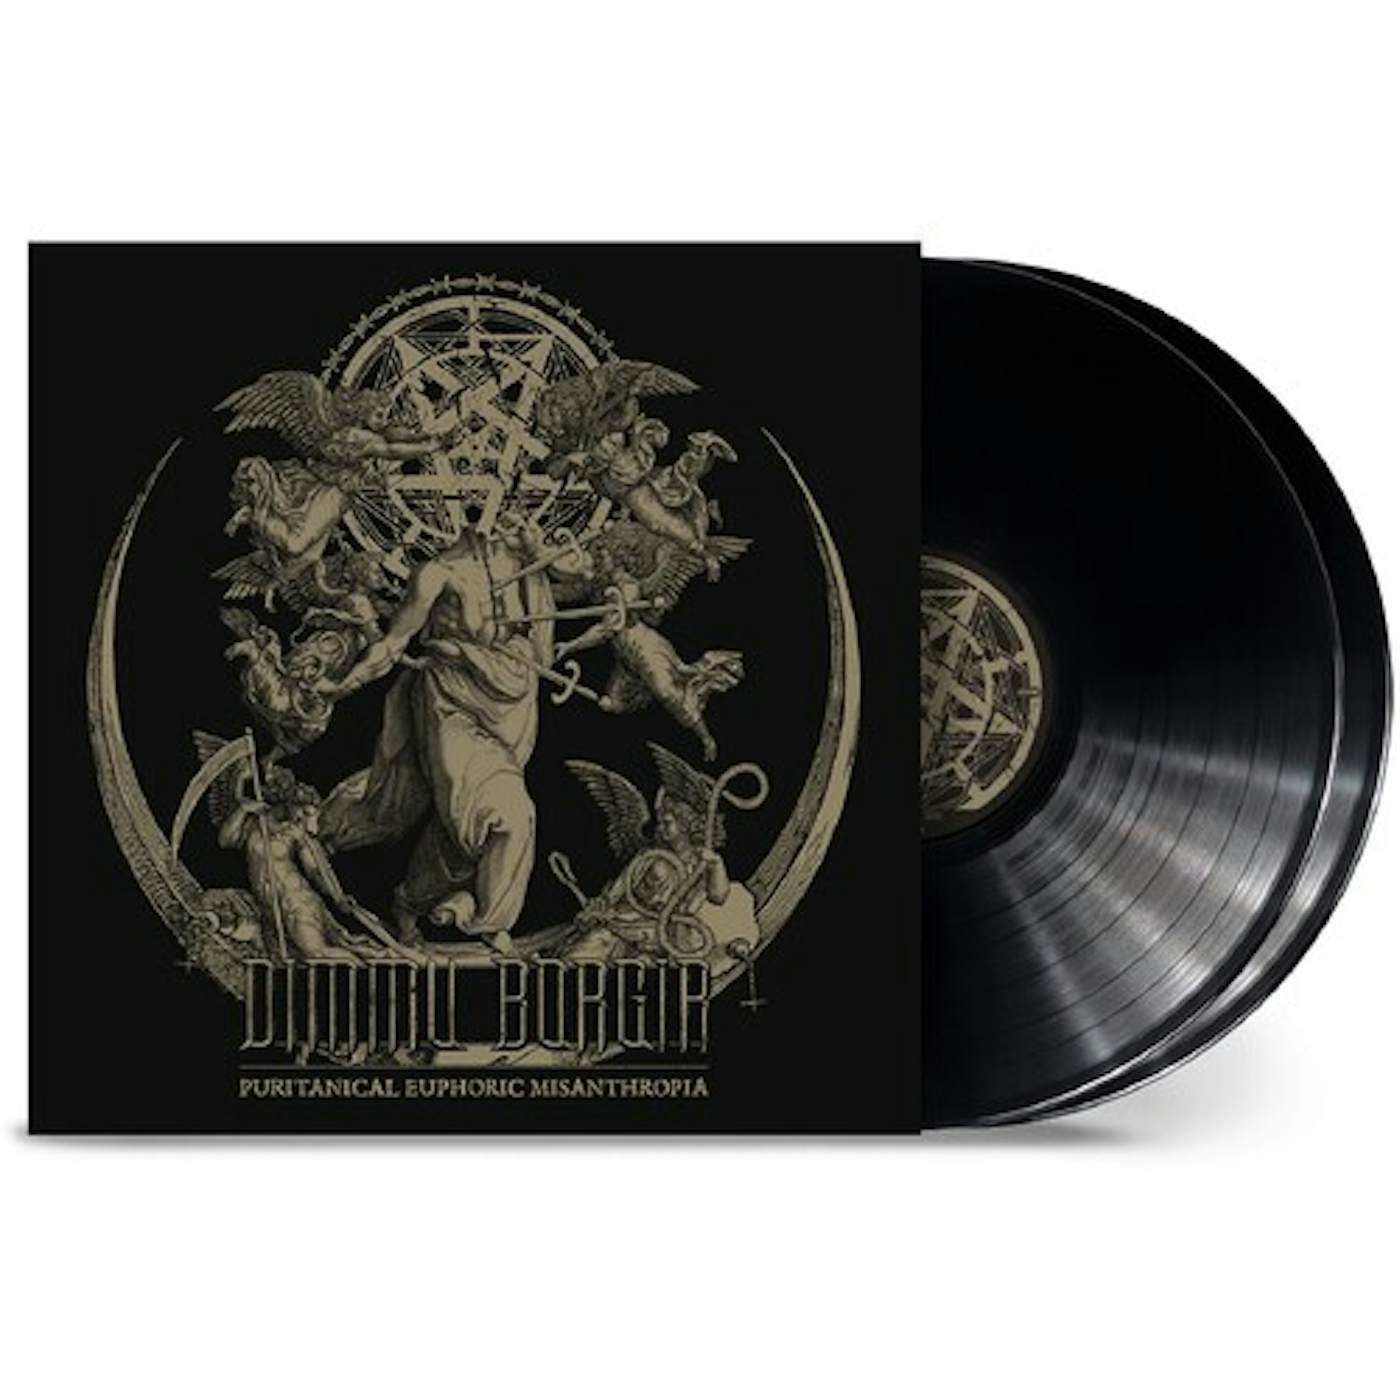 Dimmu Borgir Puritanical Euphoric Misanthropia - Remixed Vinyl Record